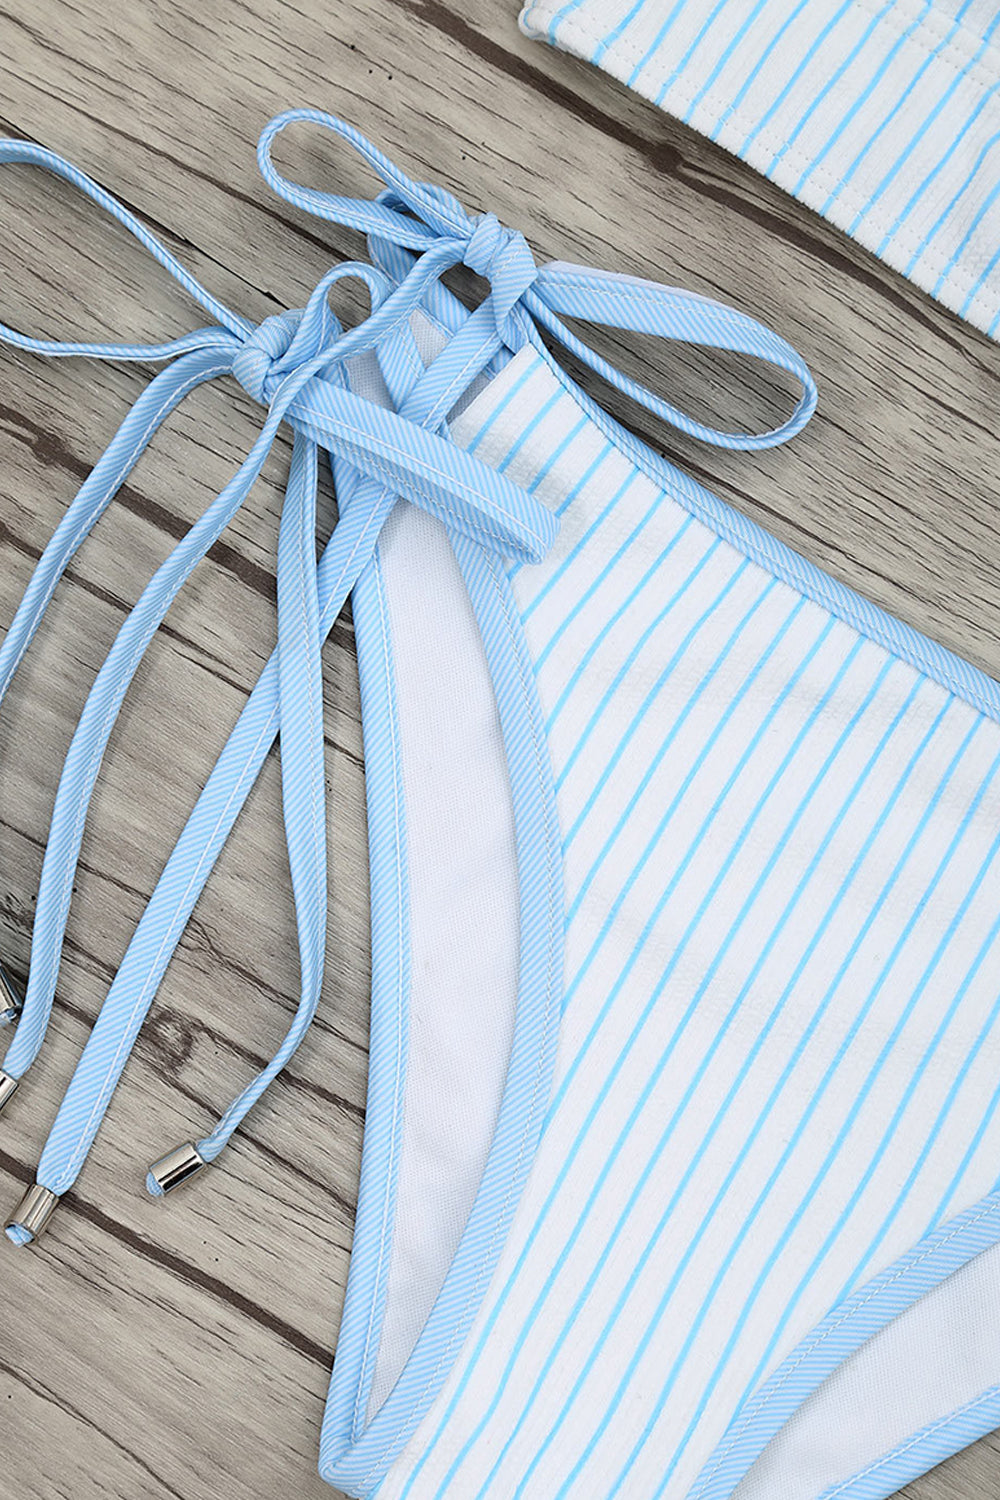 Iyasson Baby Blue Stripe Printing Halter Bikini Sets